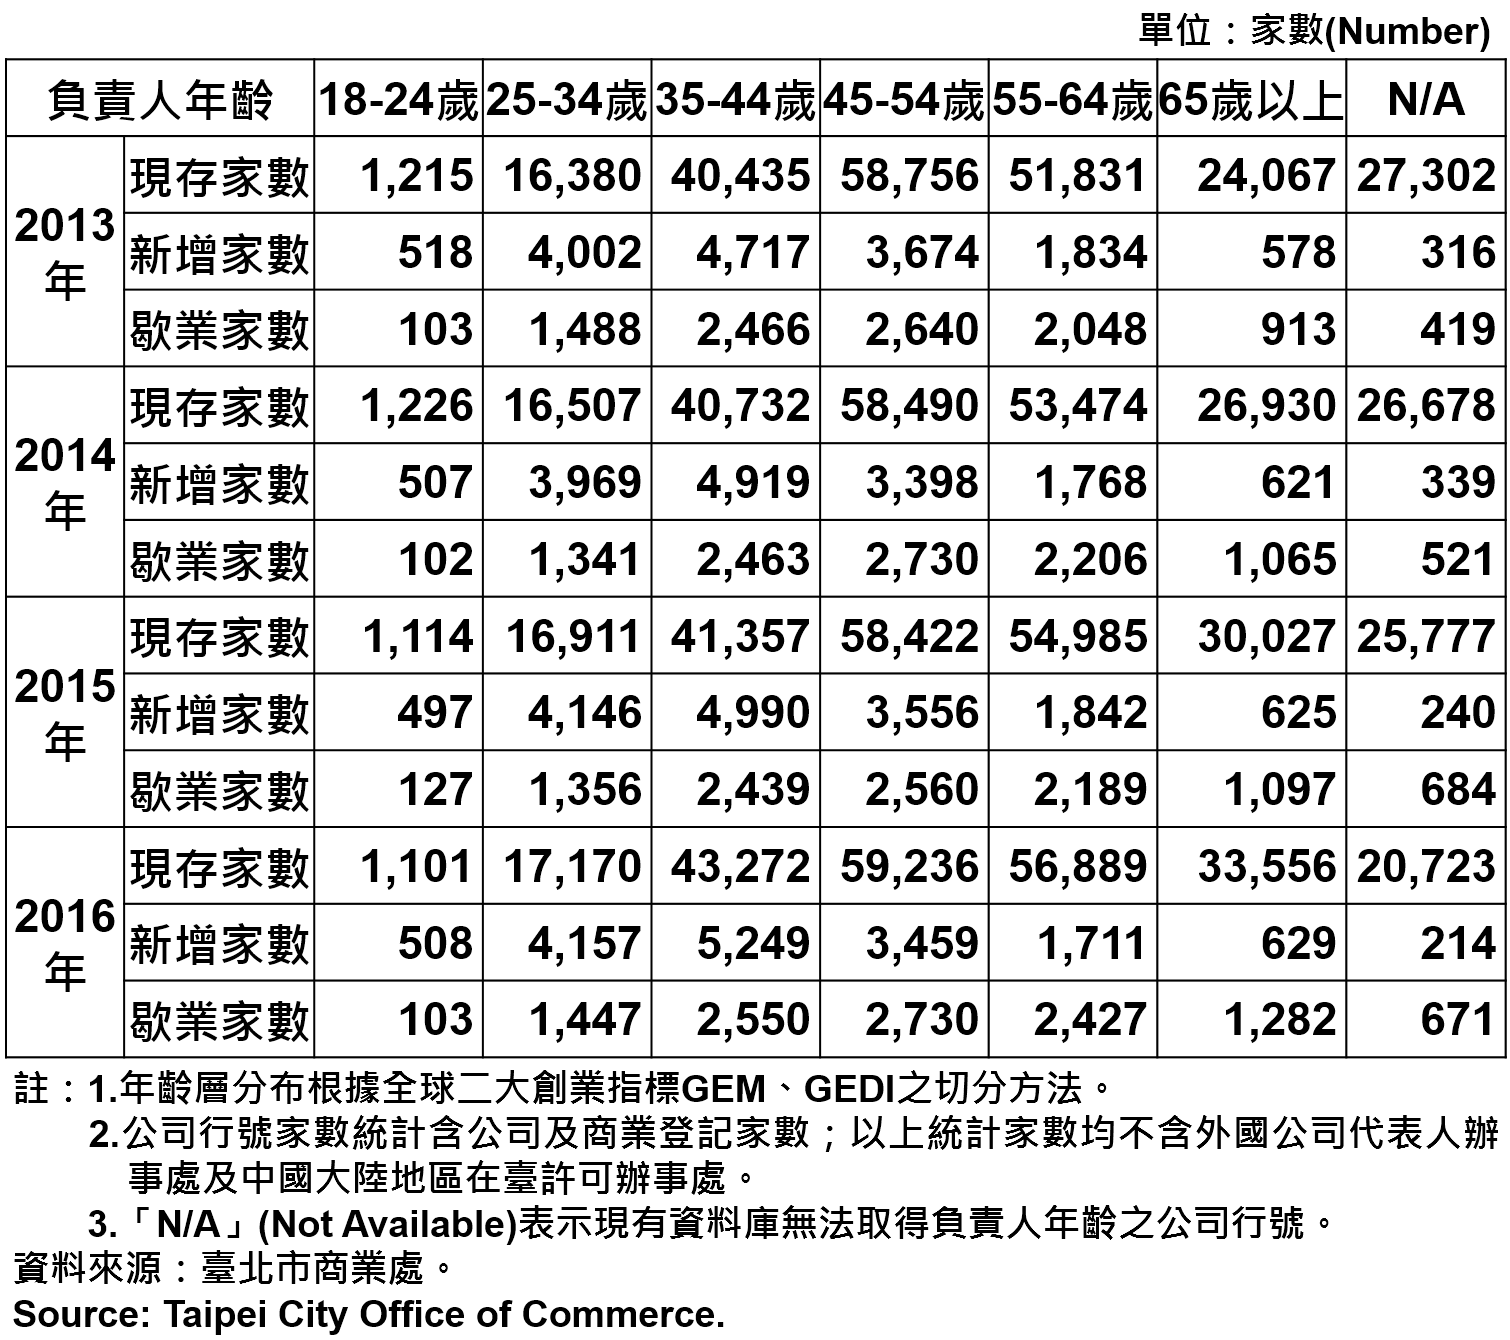 表6、臺北市公司行號負責人年齡分布情形 Responsible Person of Newly Registered Companies In Taipei by Age